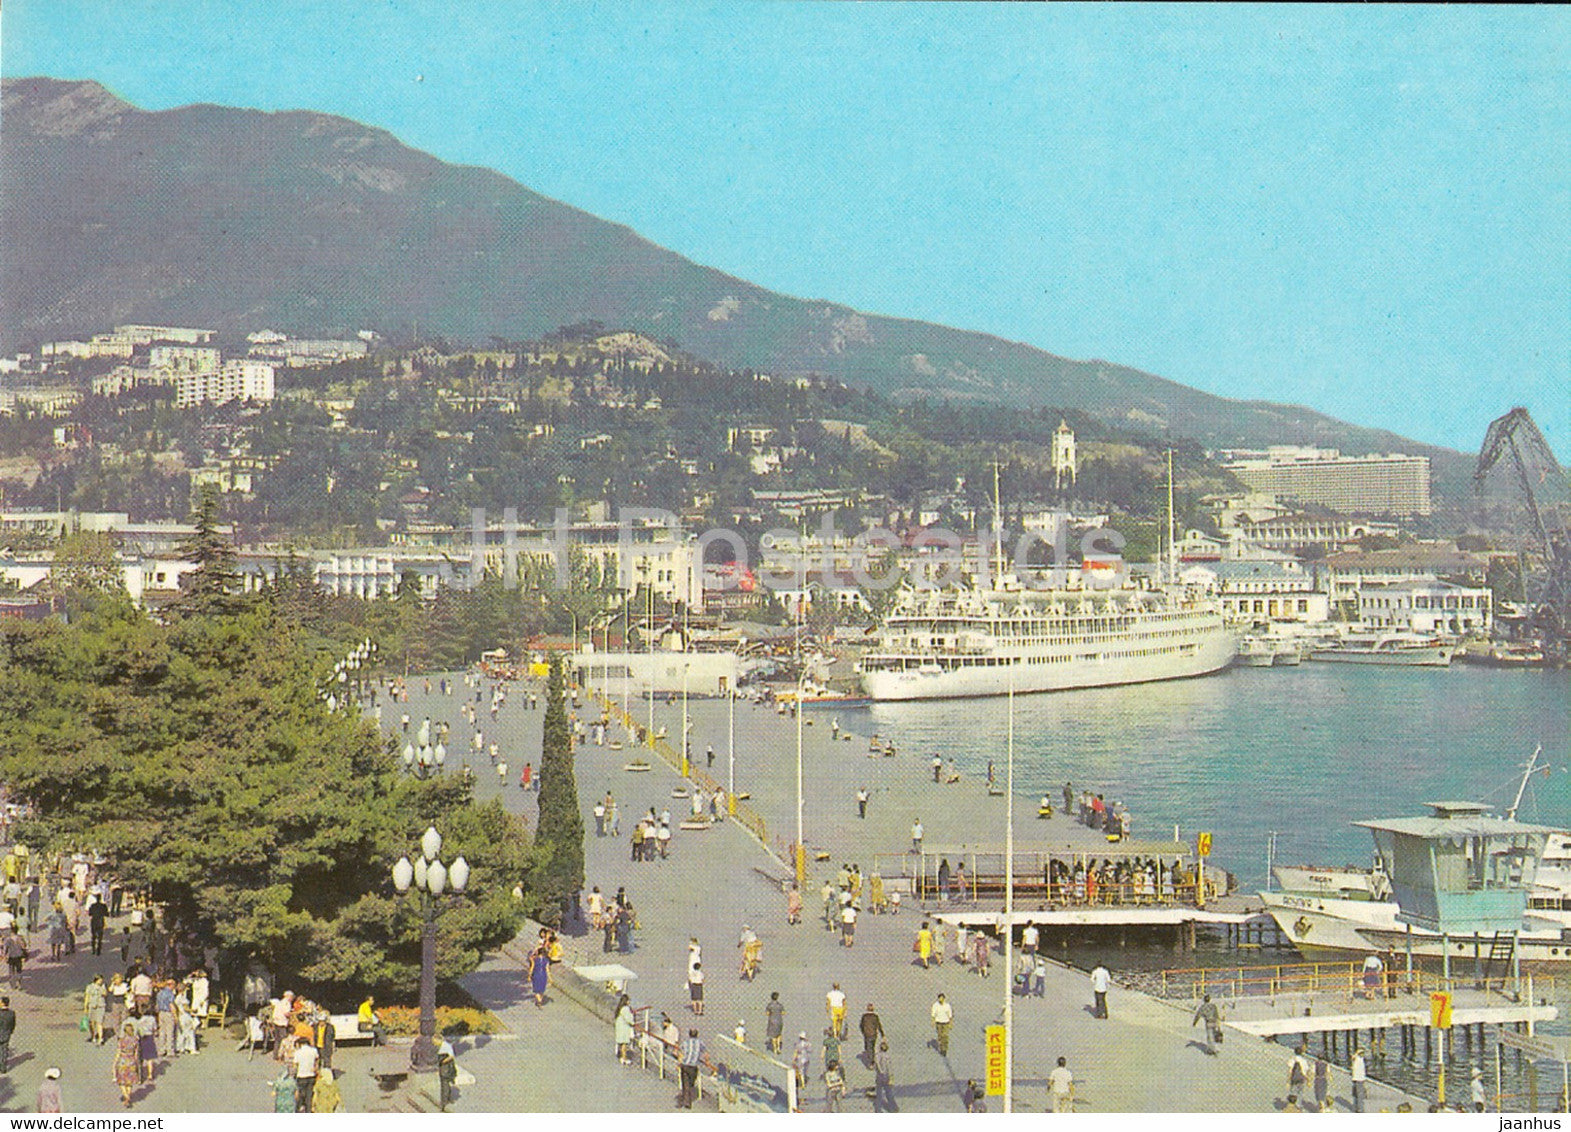 Crimea - Yalta - Lenin embankment - ship - postal stationery - 1981 - Ukraine USSR - unused - JH Postcards